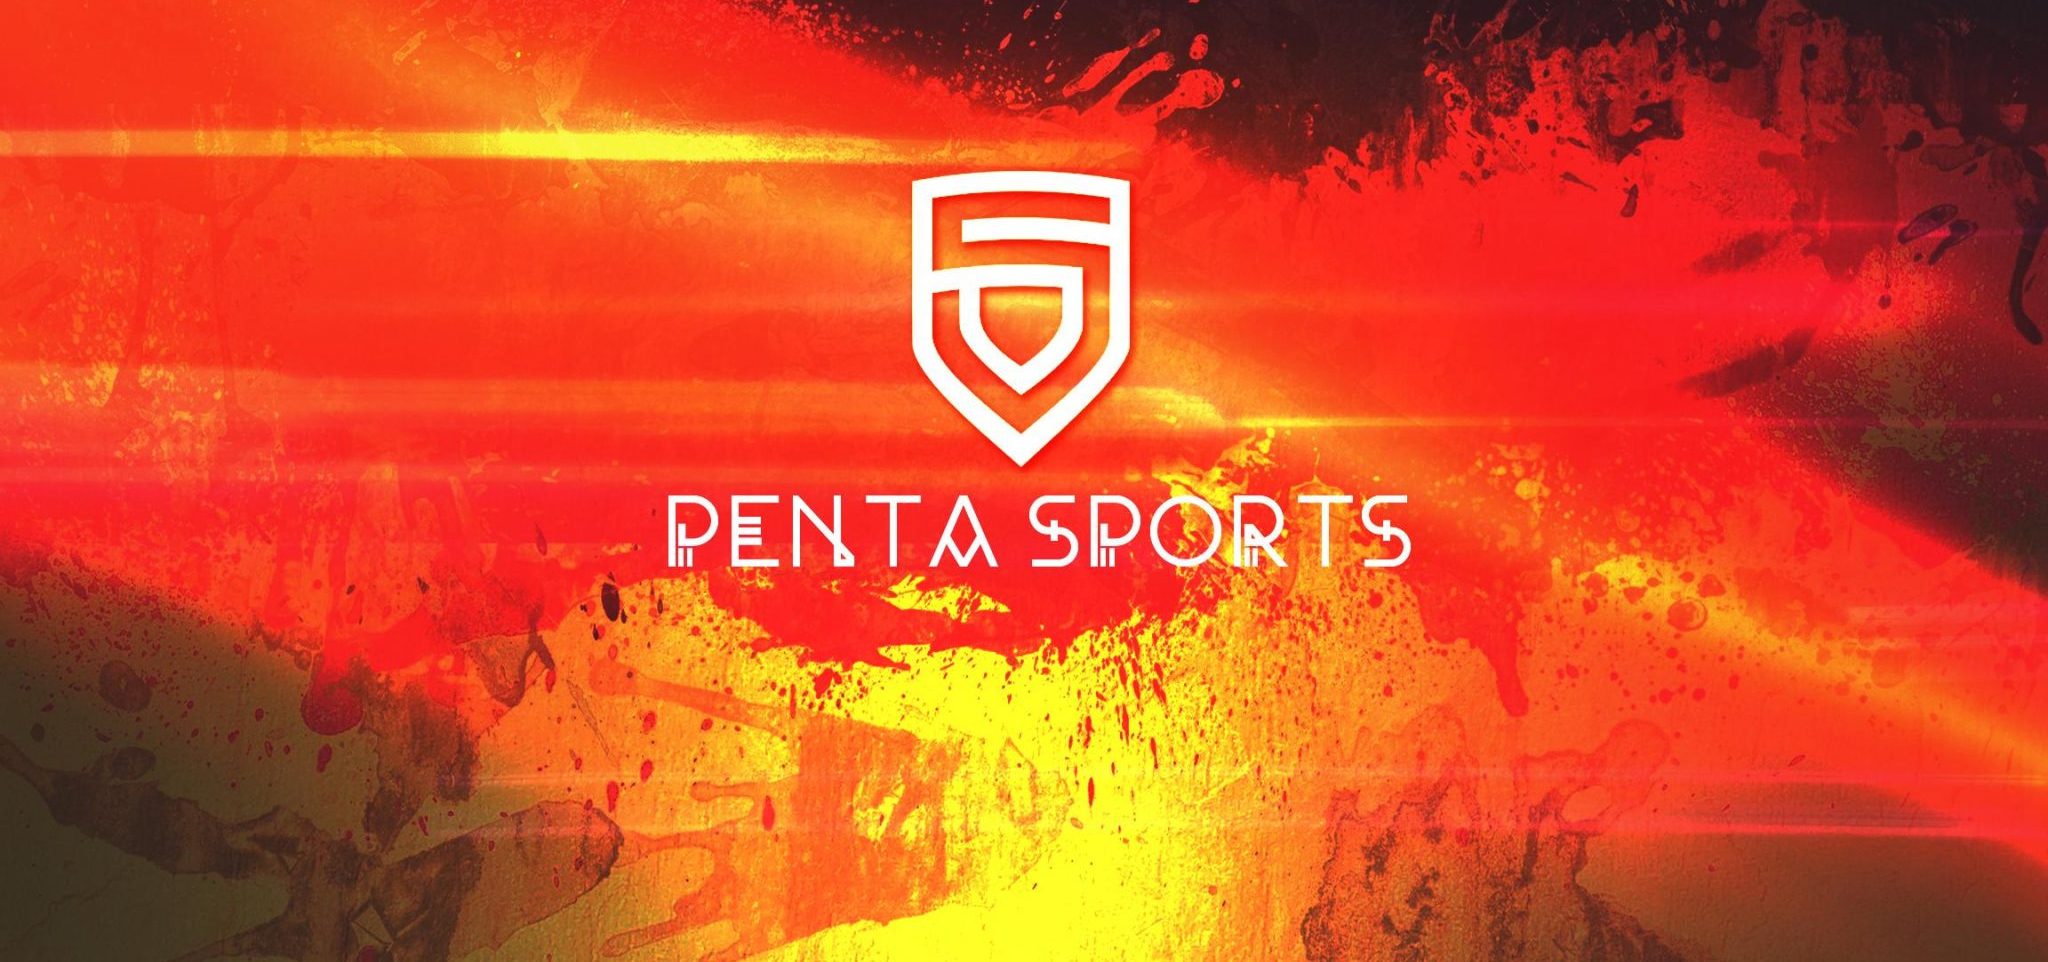 Penta Sports